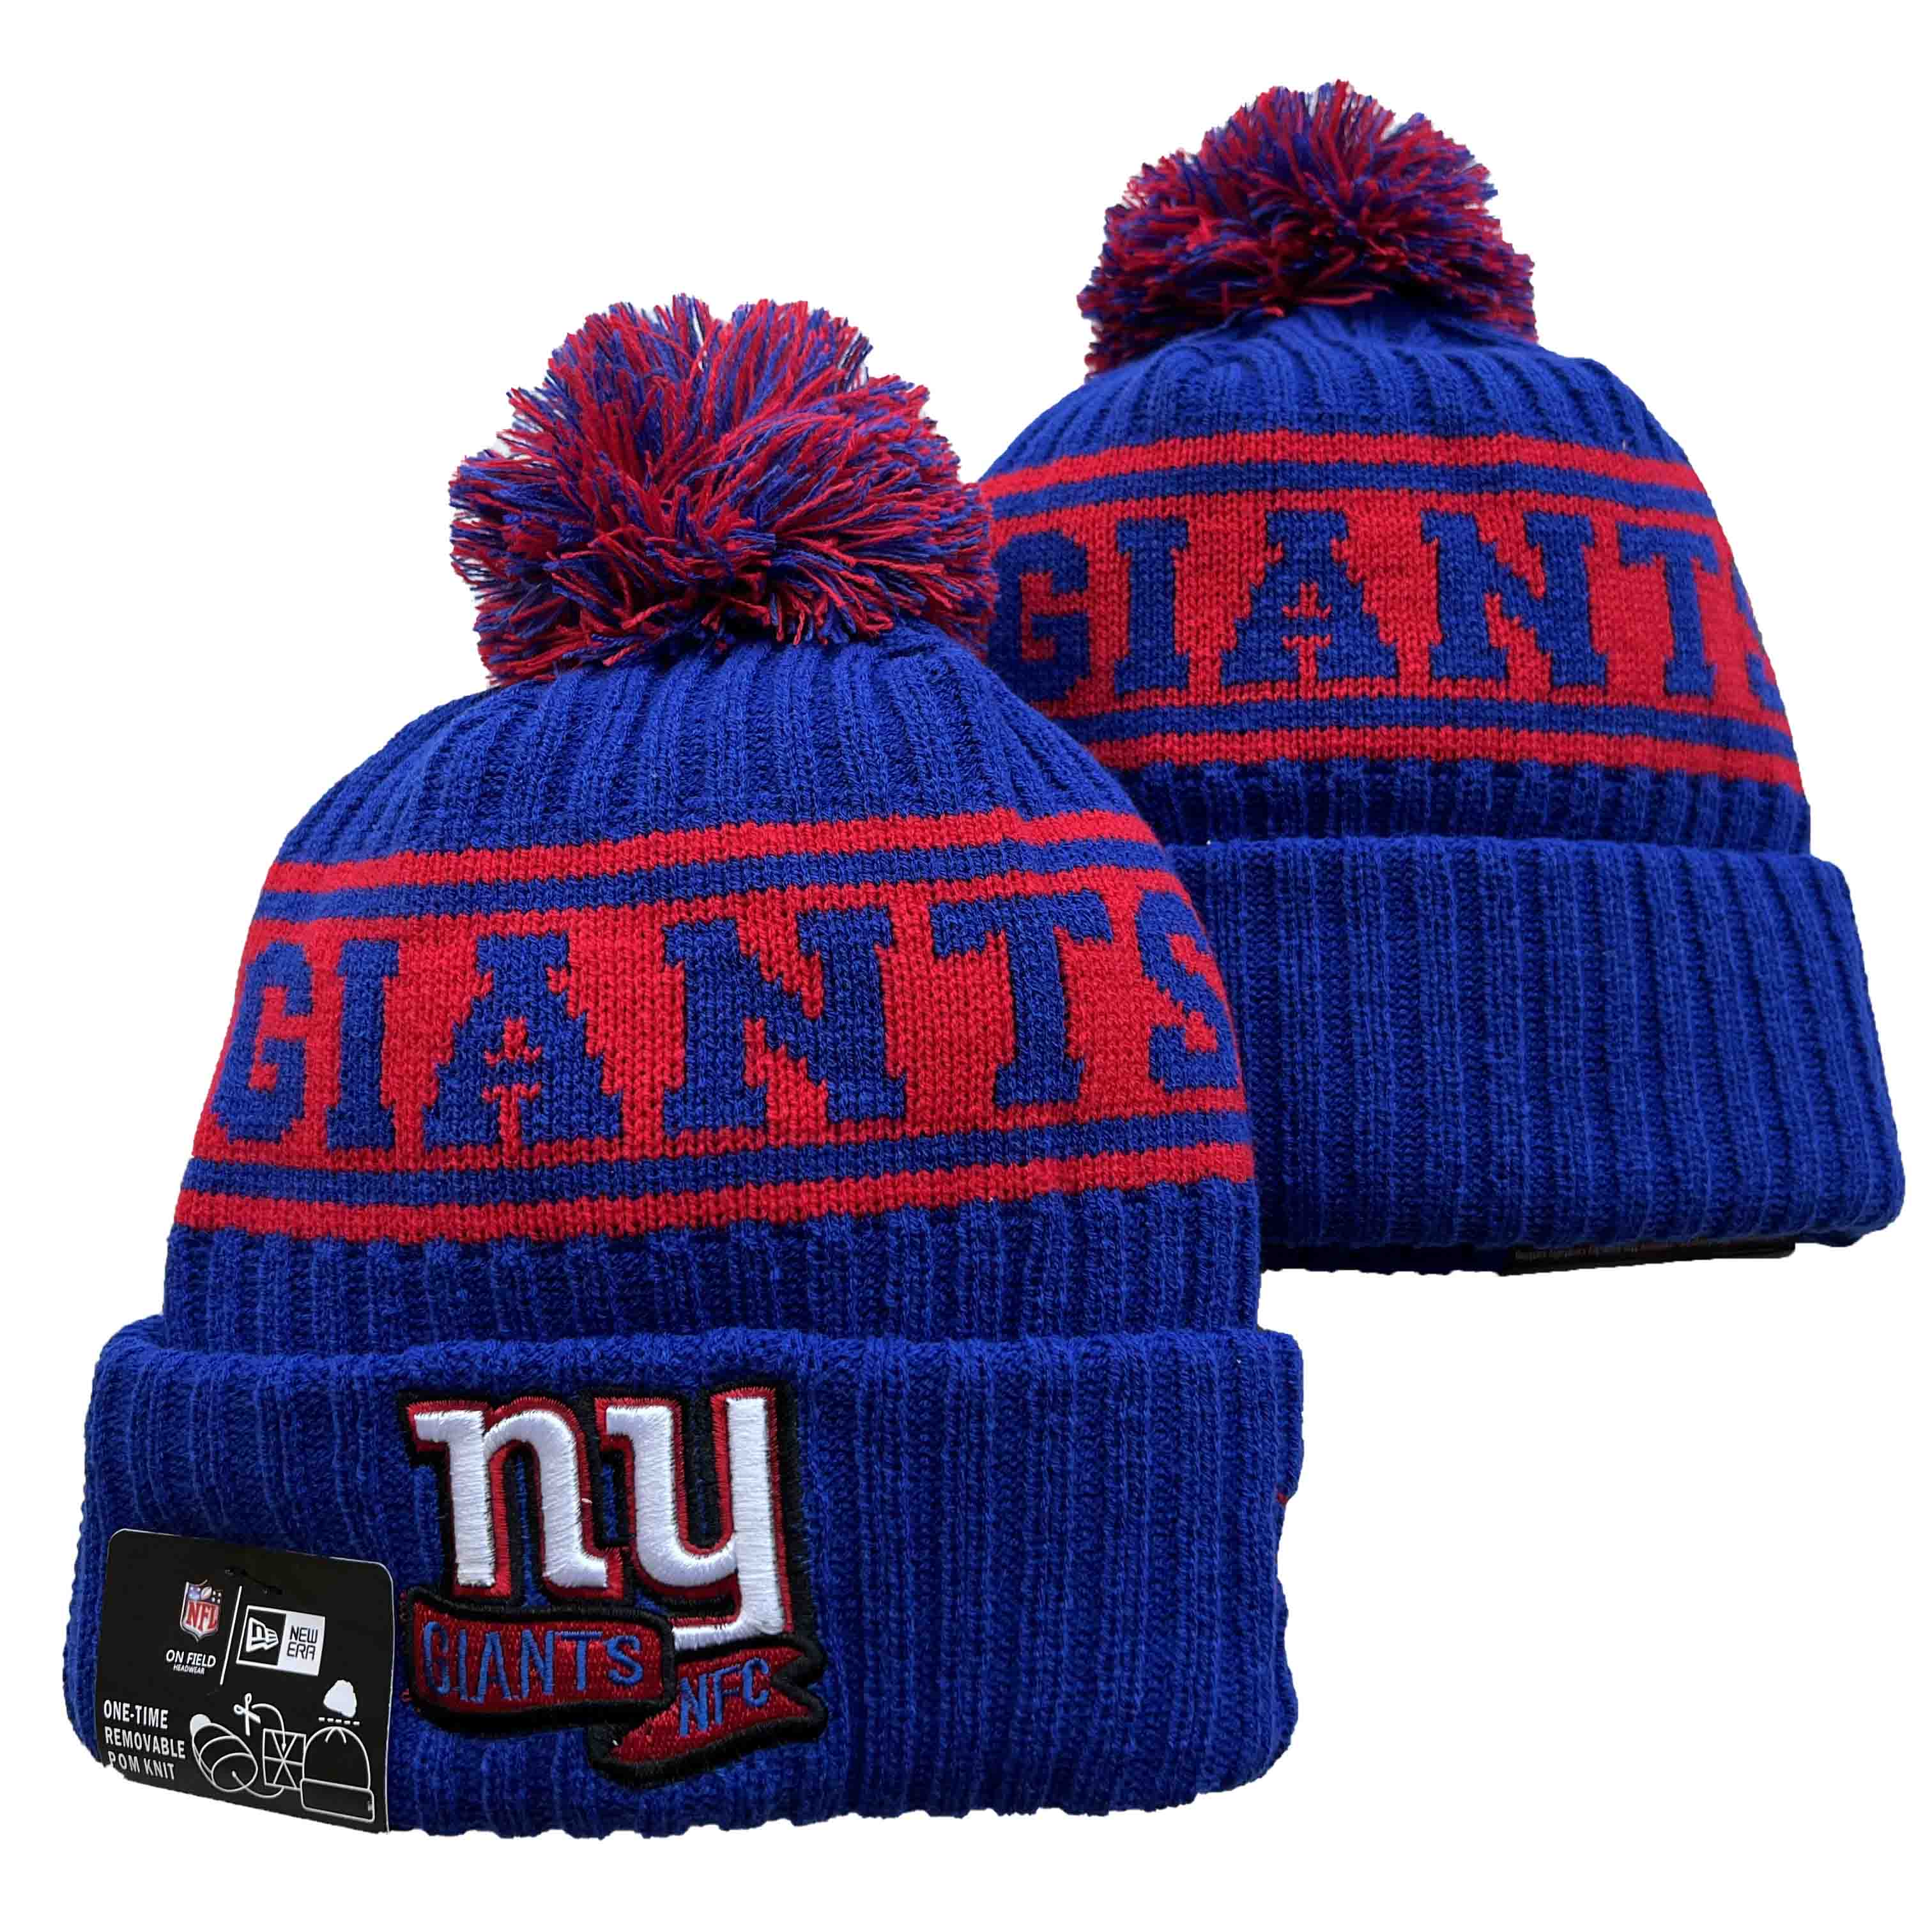 NFL New York Giants Beanies Knit Hats-YD1064